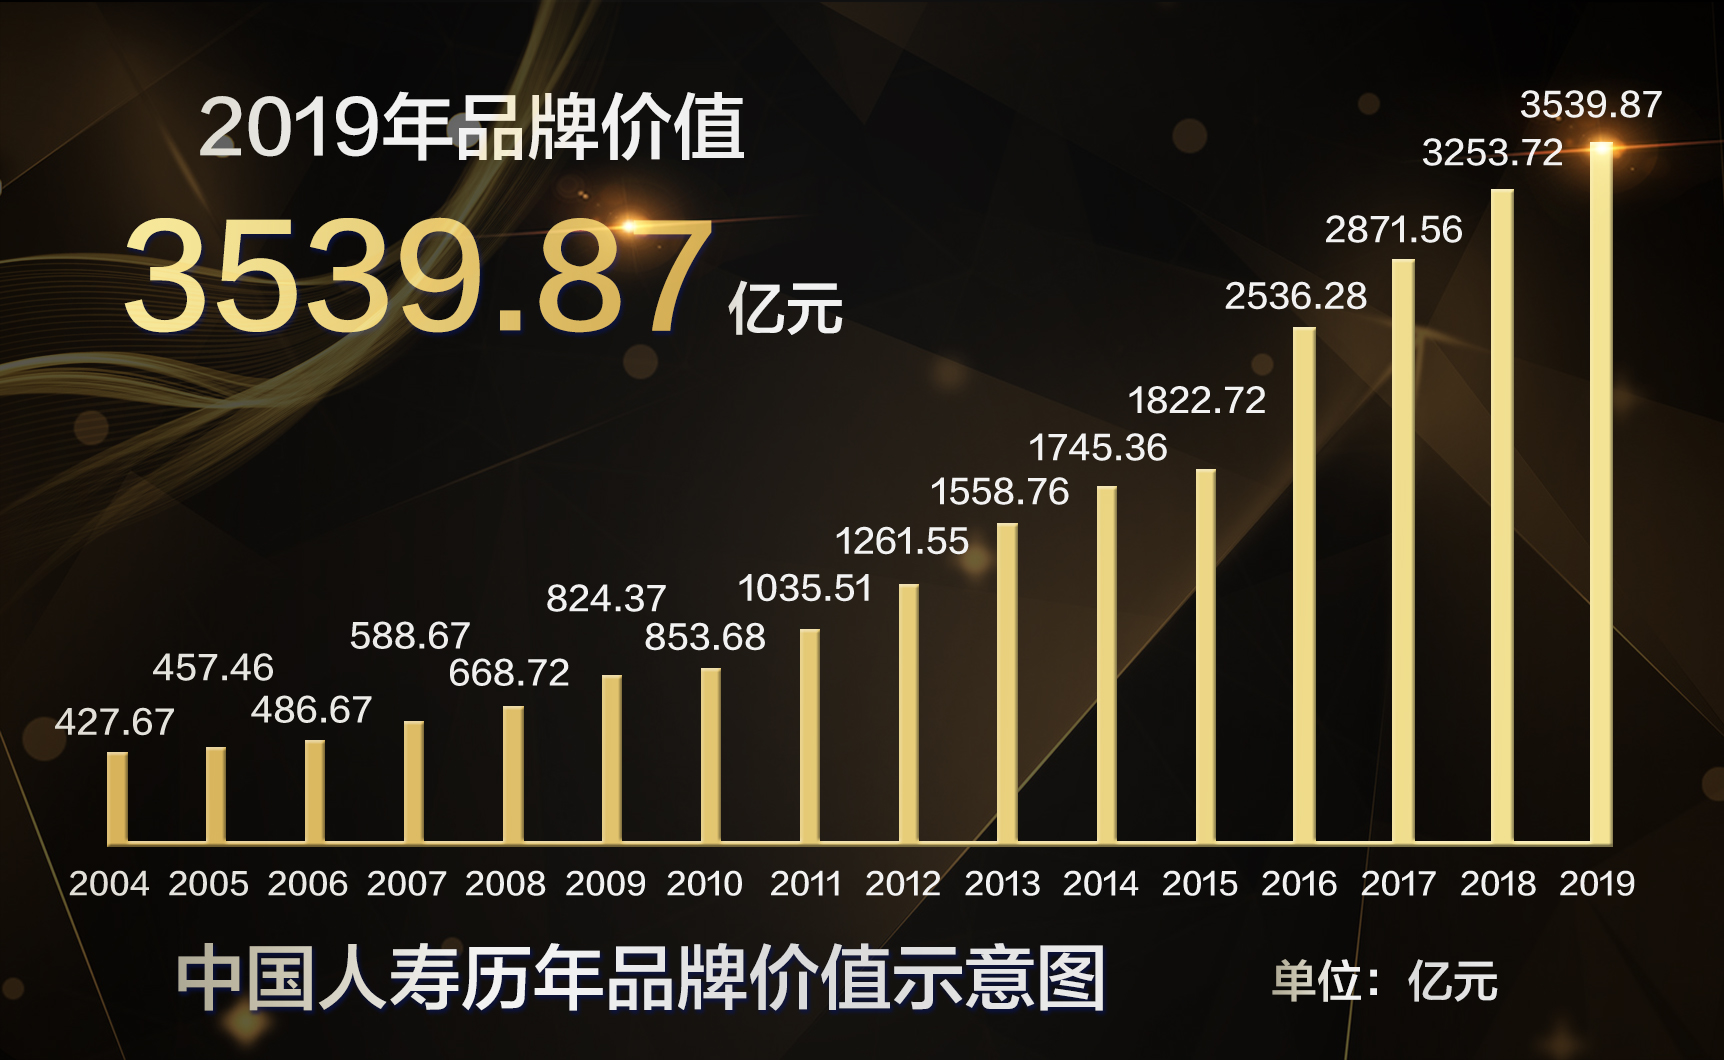 brand lab)在北京发布2019年中国500最具价值品牌报告,中国人寿连续